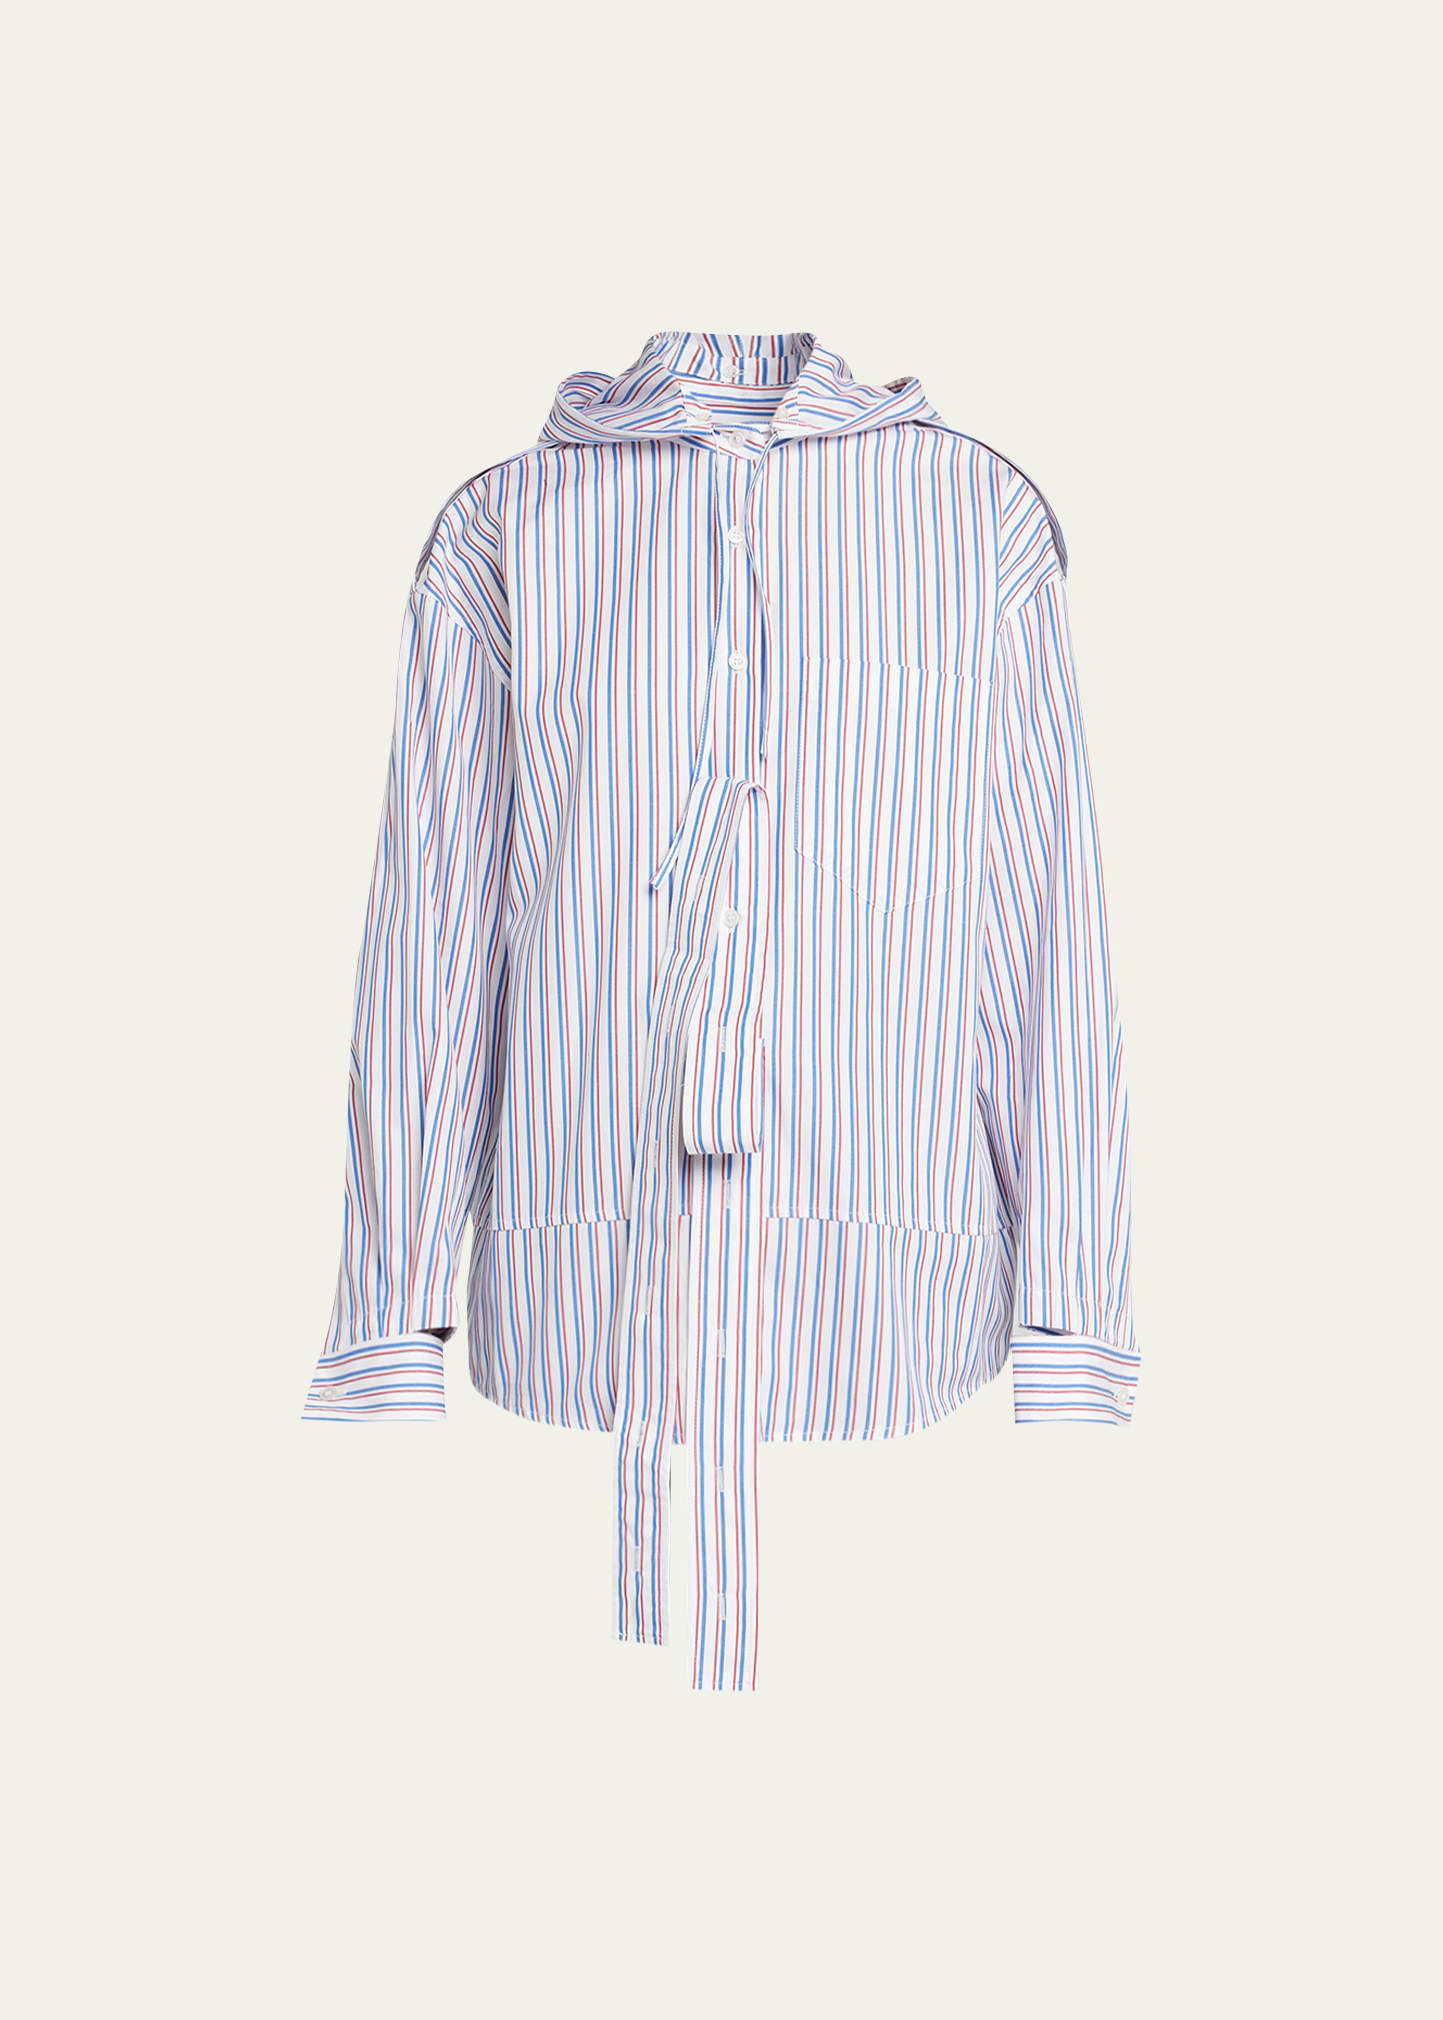 MERYLL ROGGE Stripe Deconstructed Men's Shirt with Hood